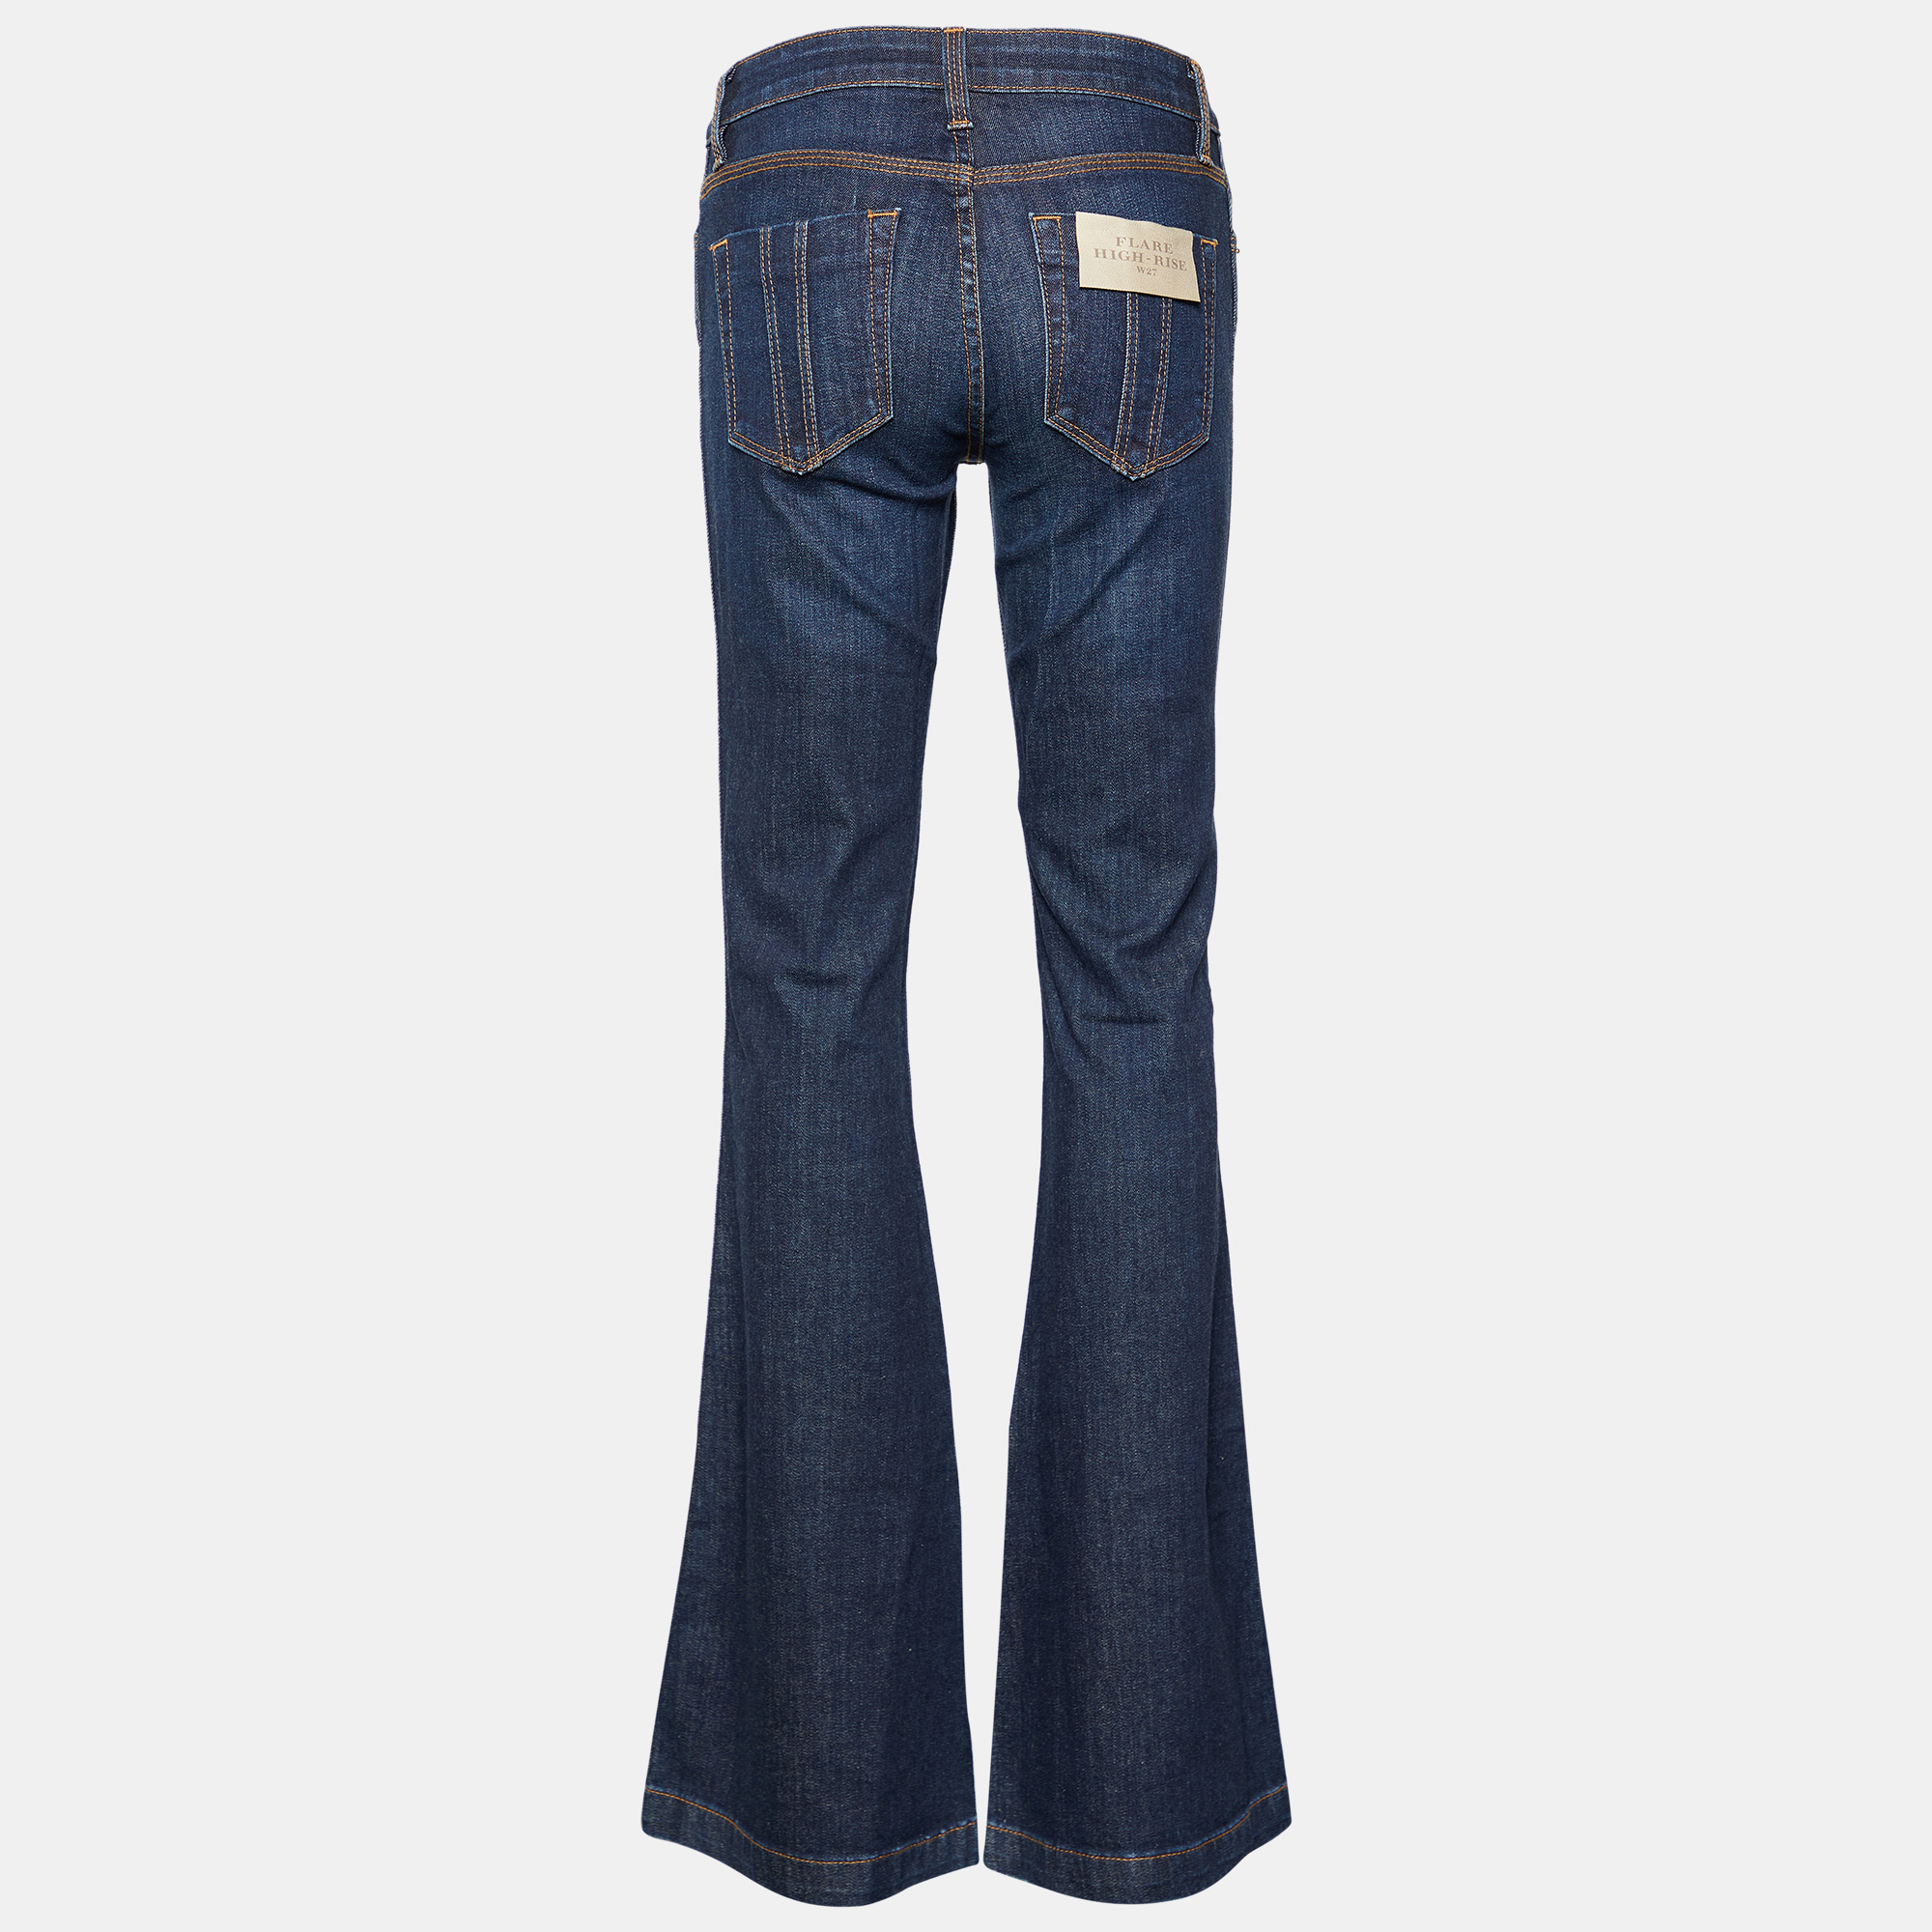 

Burberry Brit Navy Blue Denim Flared High Rise Jeans  Waist 28.5